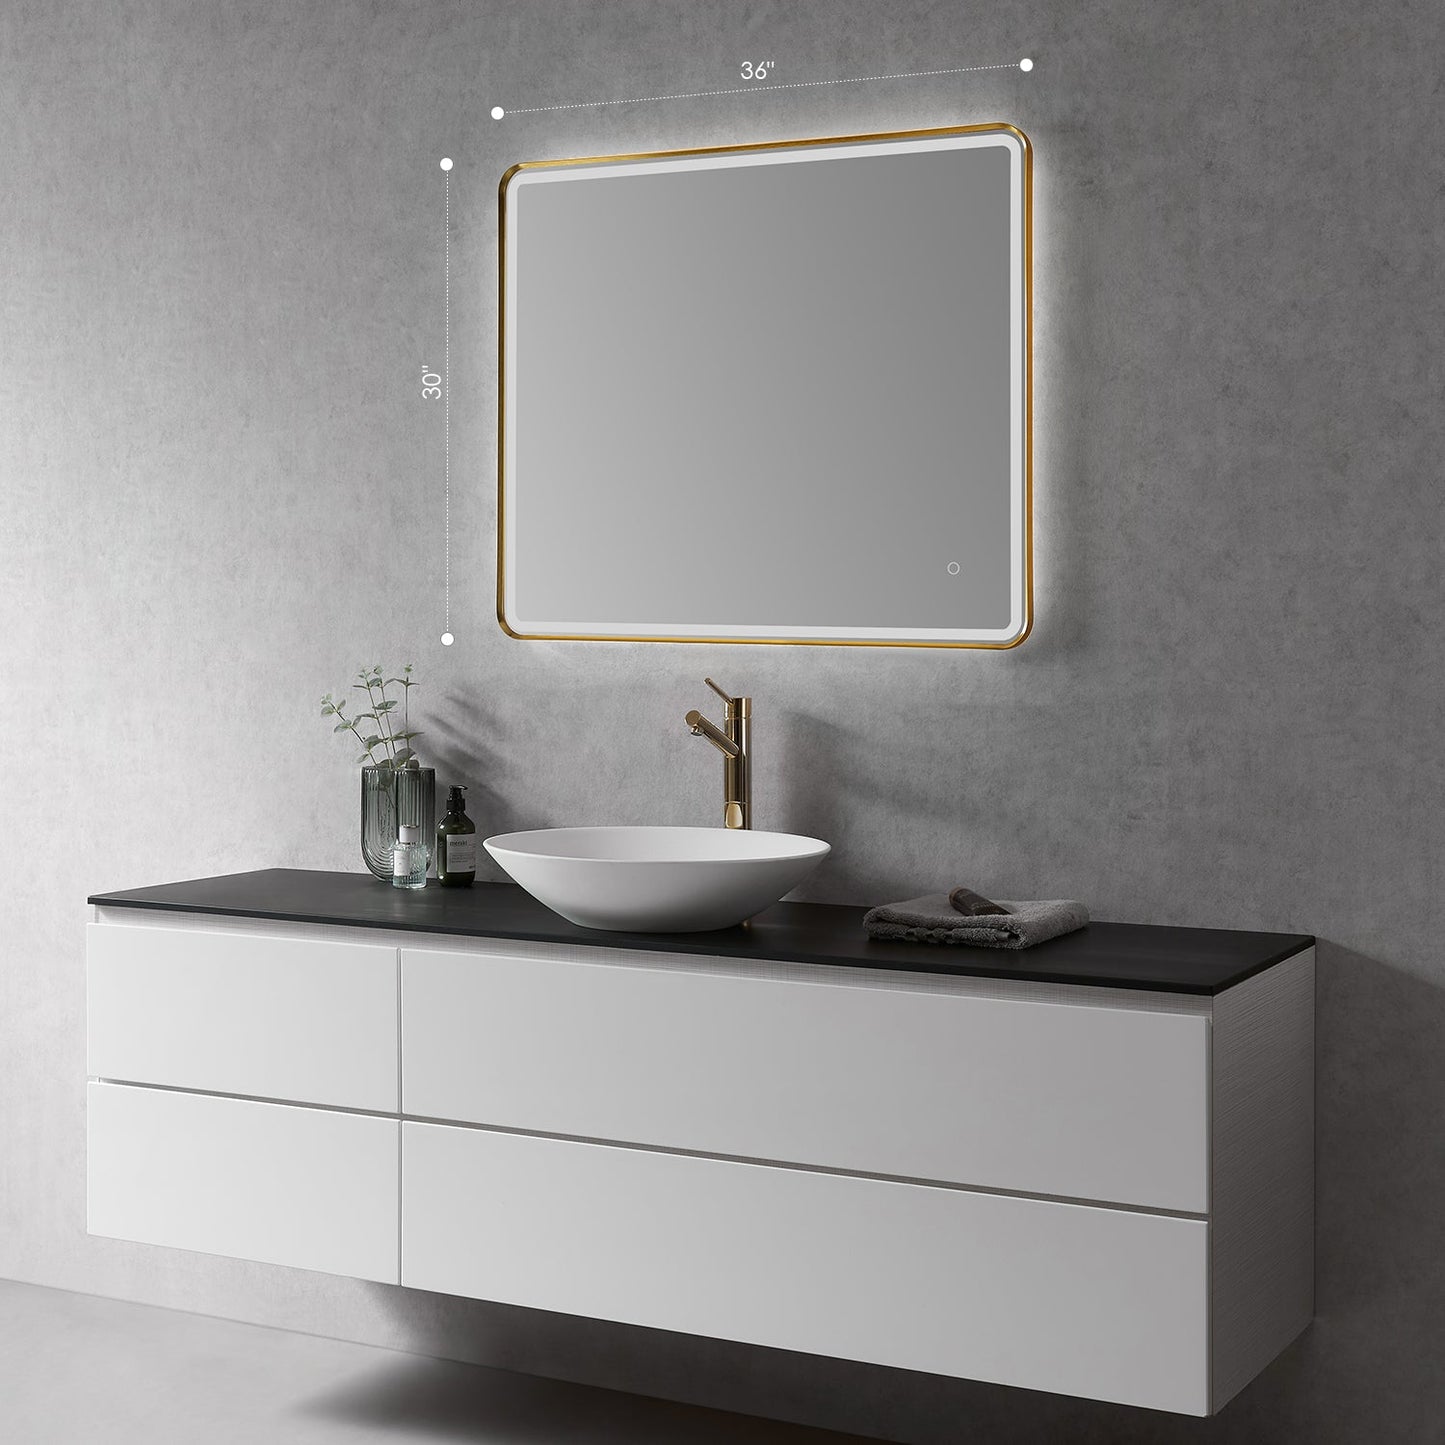 Viaggi Rectangle 36" Framed in Brushed Gold Modern Bathroom/Vanity LED Lighted Wall Mirror